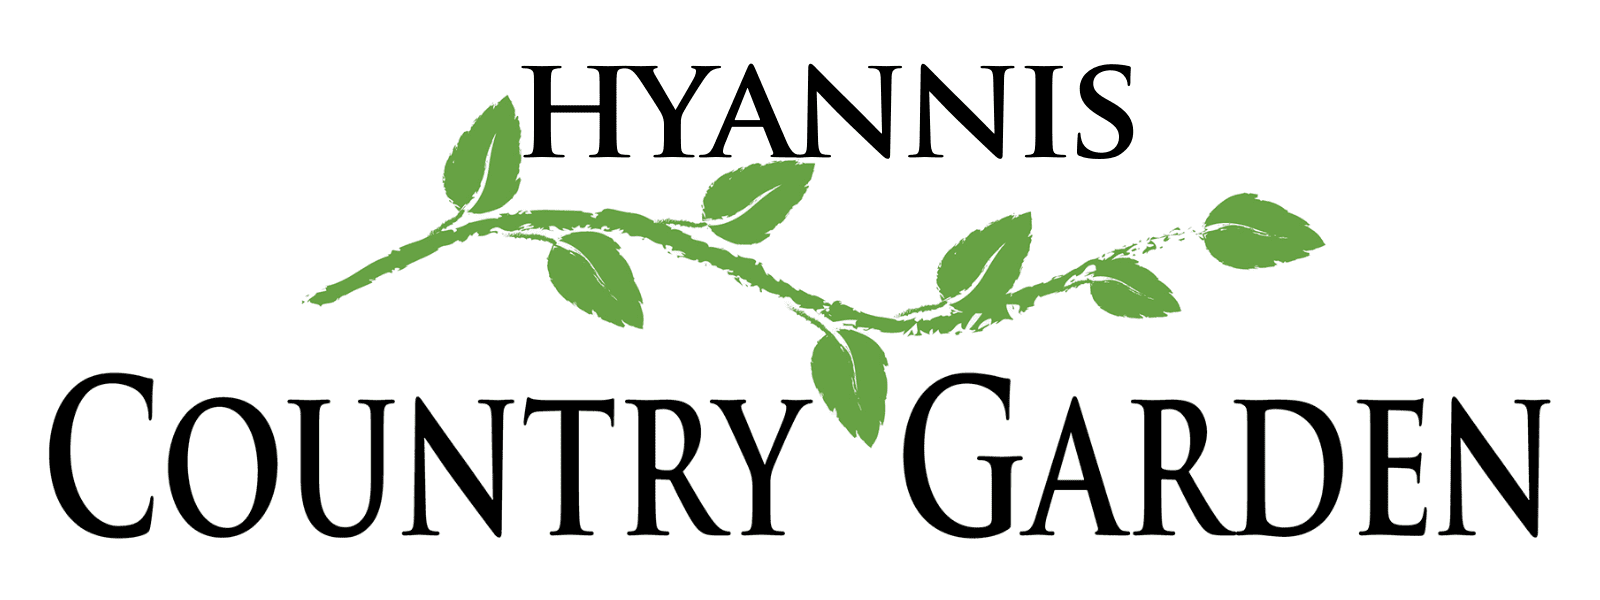 Events - Hyannis Country Garden